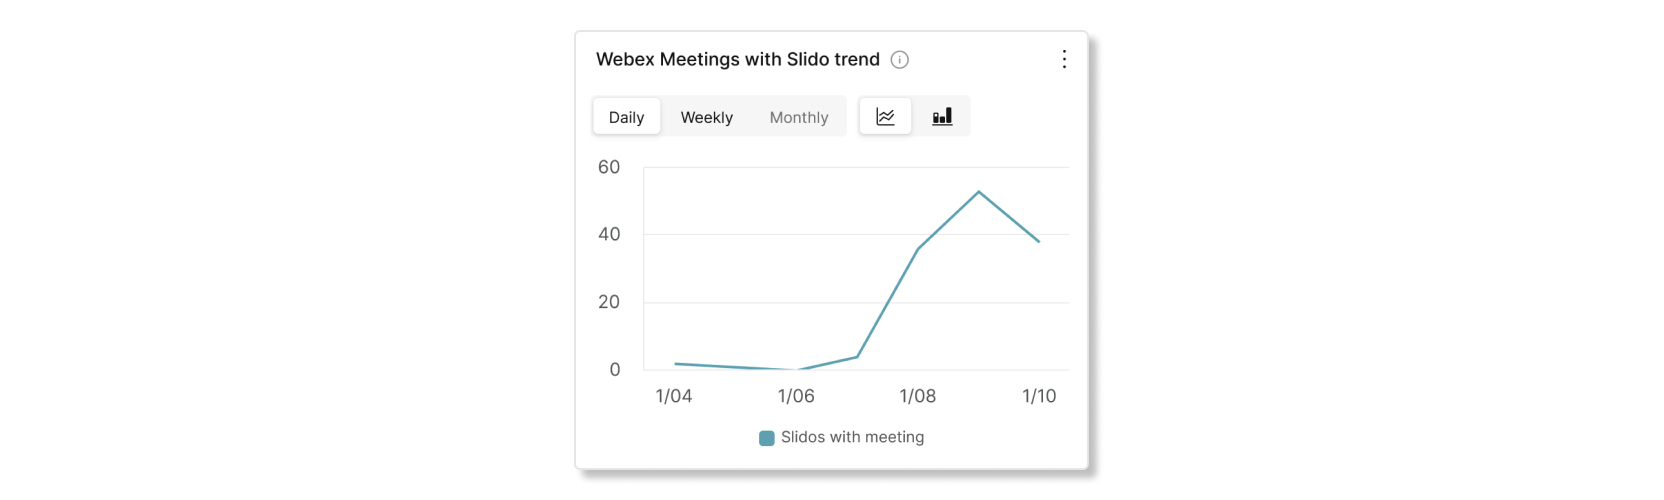 Webex Meetings with Slido trend chart in Control Hub Slido analytics